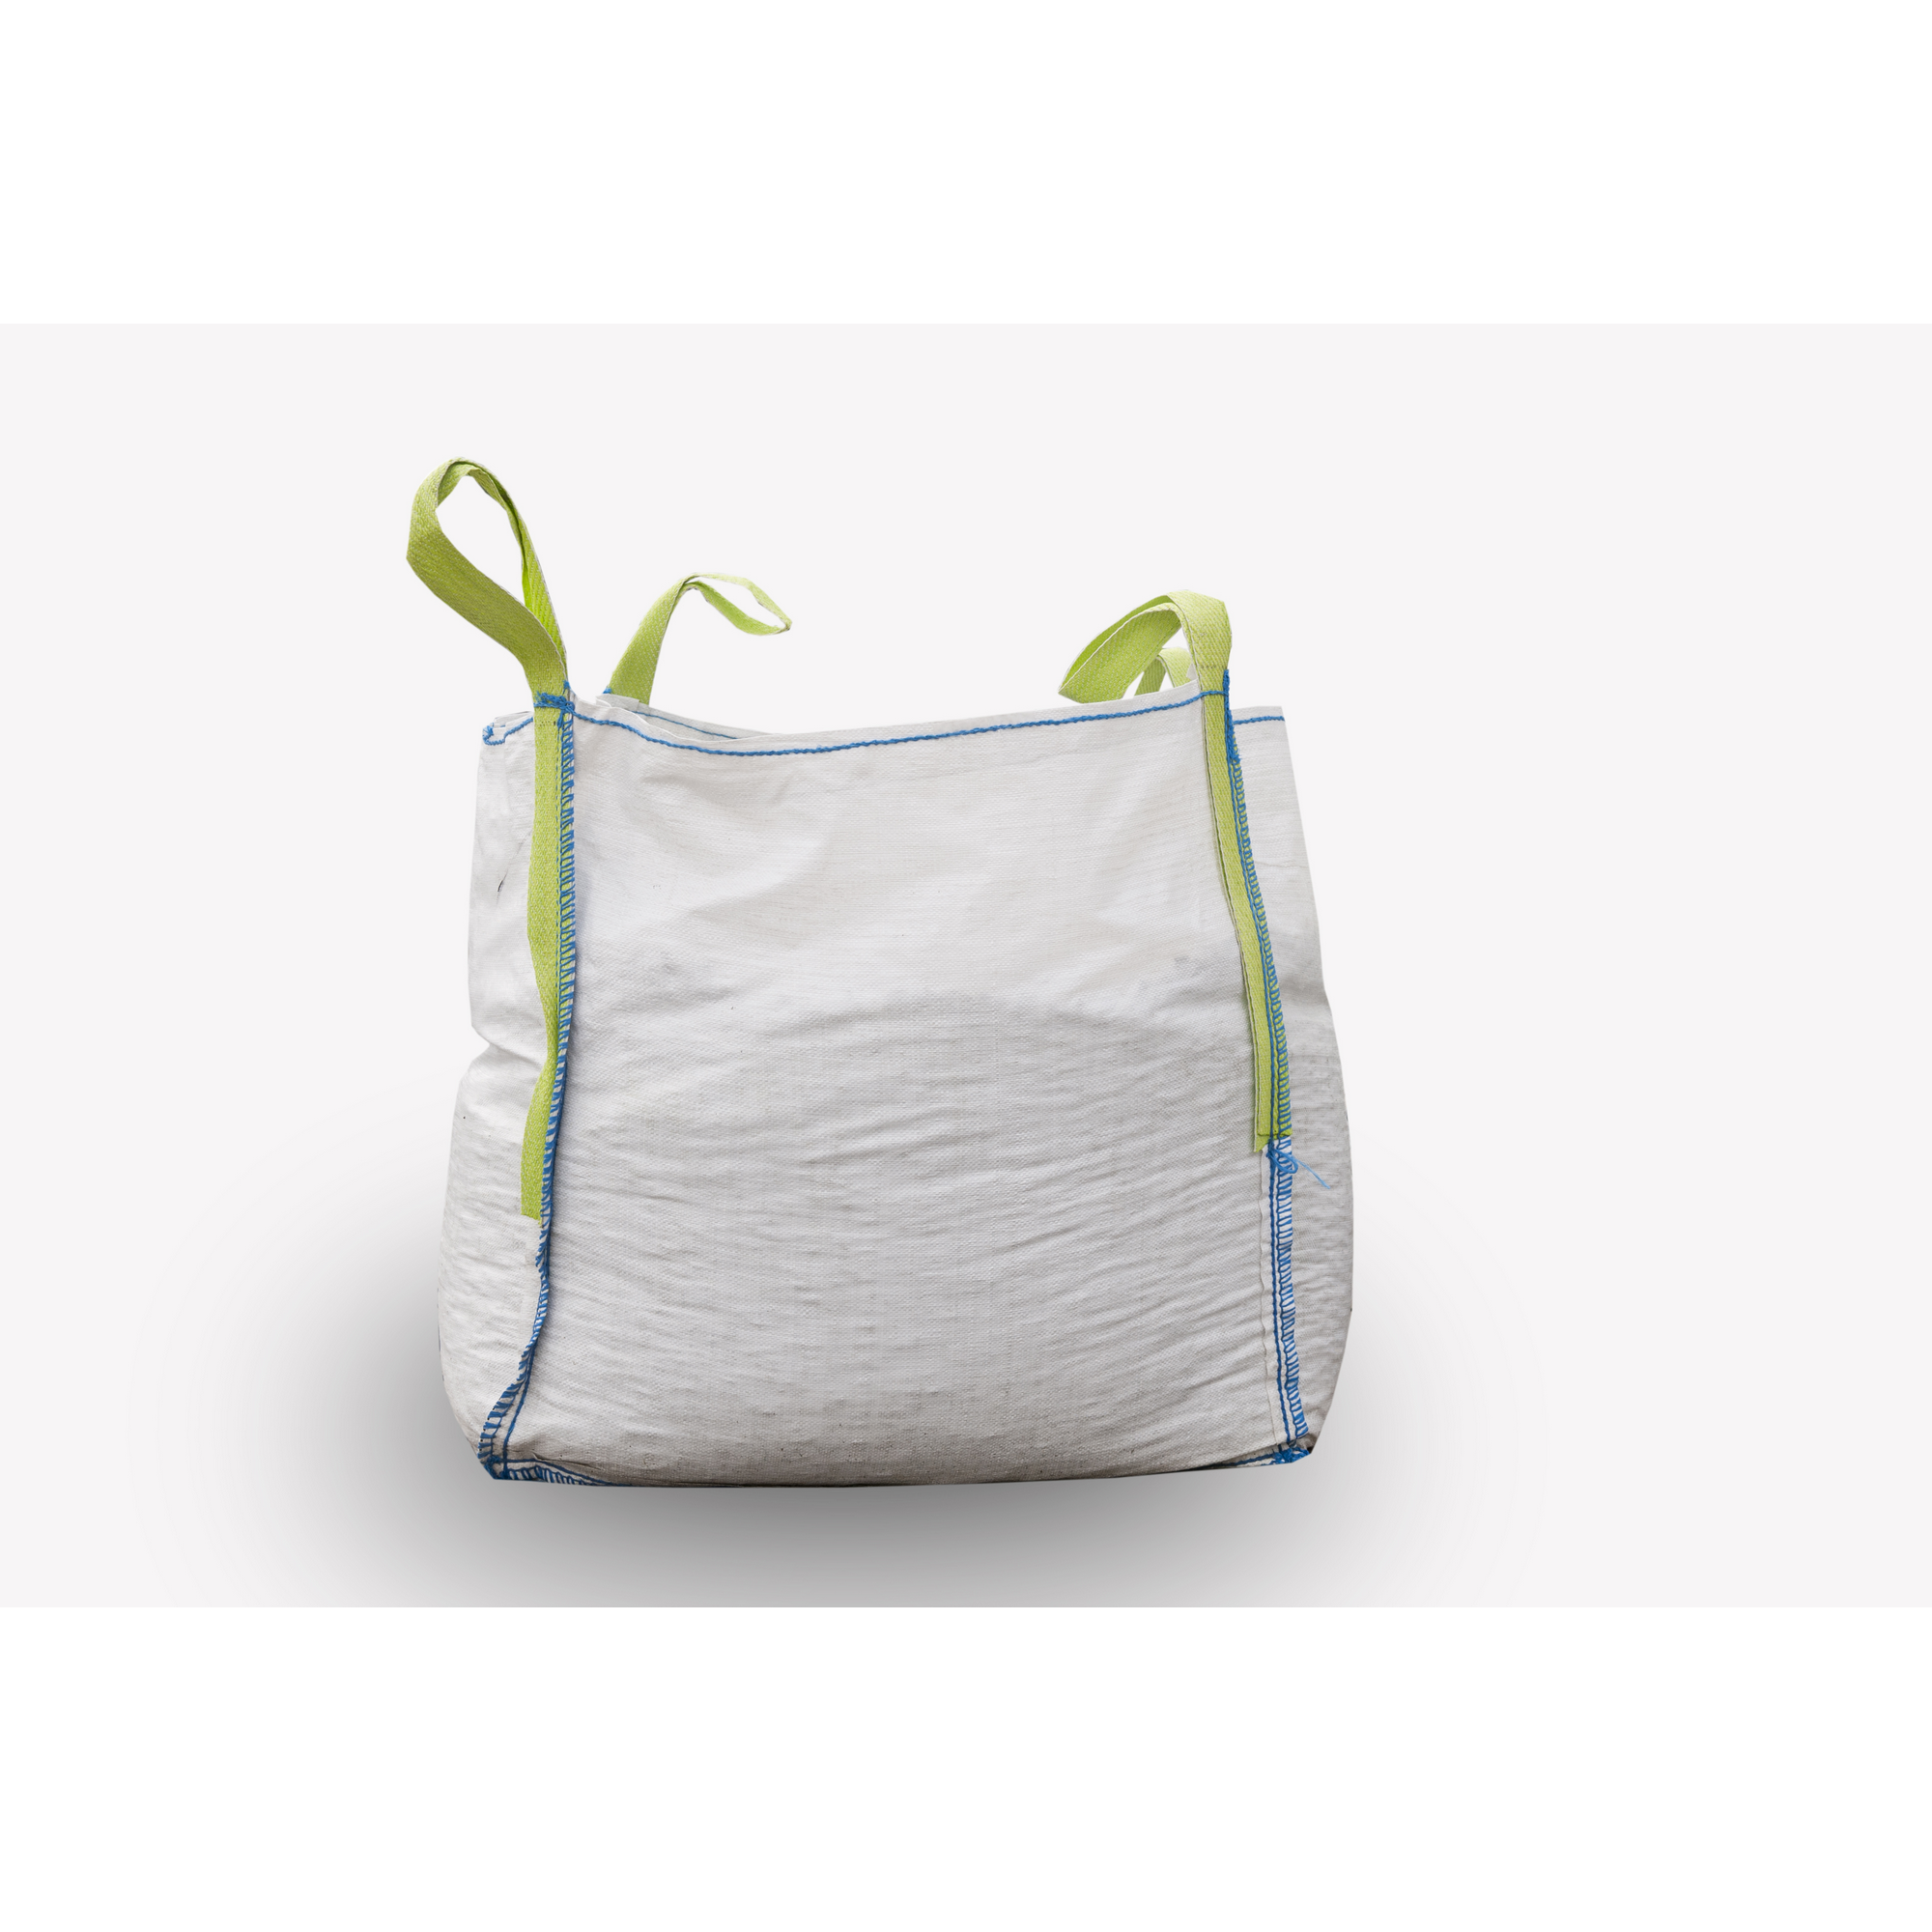 Carrara-Marmorkies weiß 40/60 mm 250 kg im Big Bag + product picture